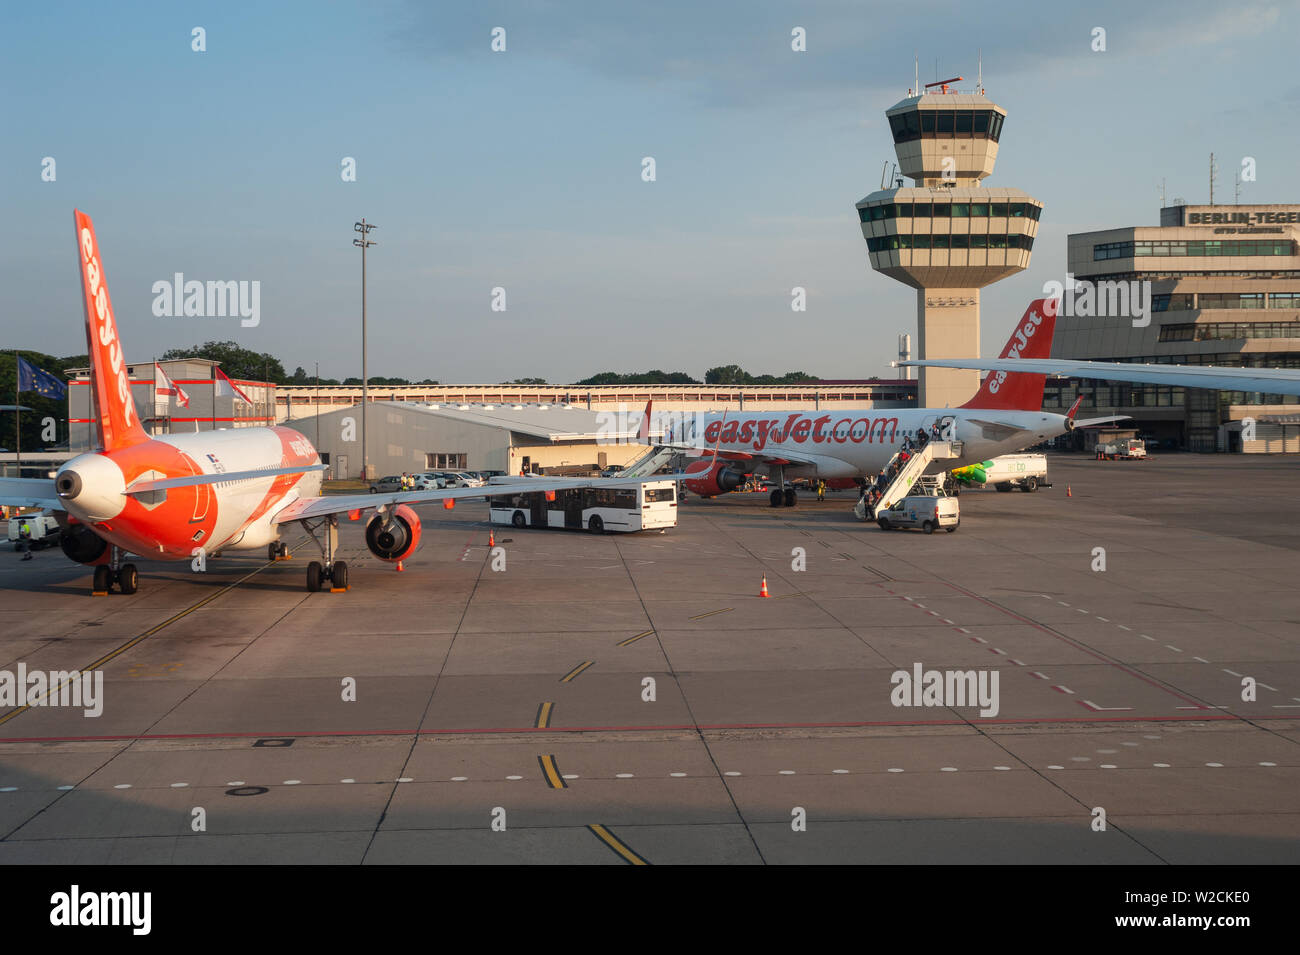 05.06.2019, Berlin, Germany, Europe - Easyjet passenger planes at Tegel Airport. Stock Photo